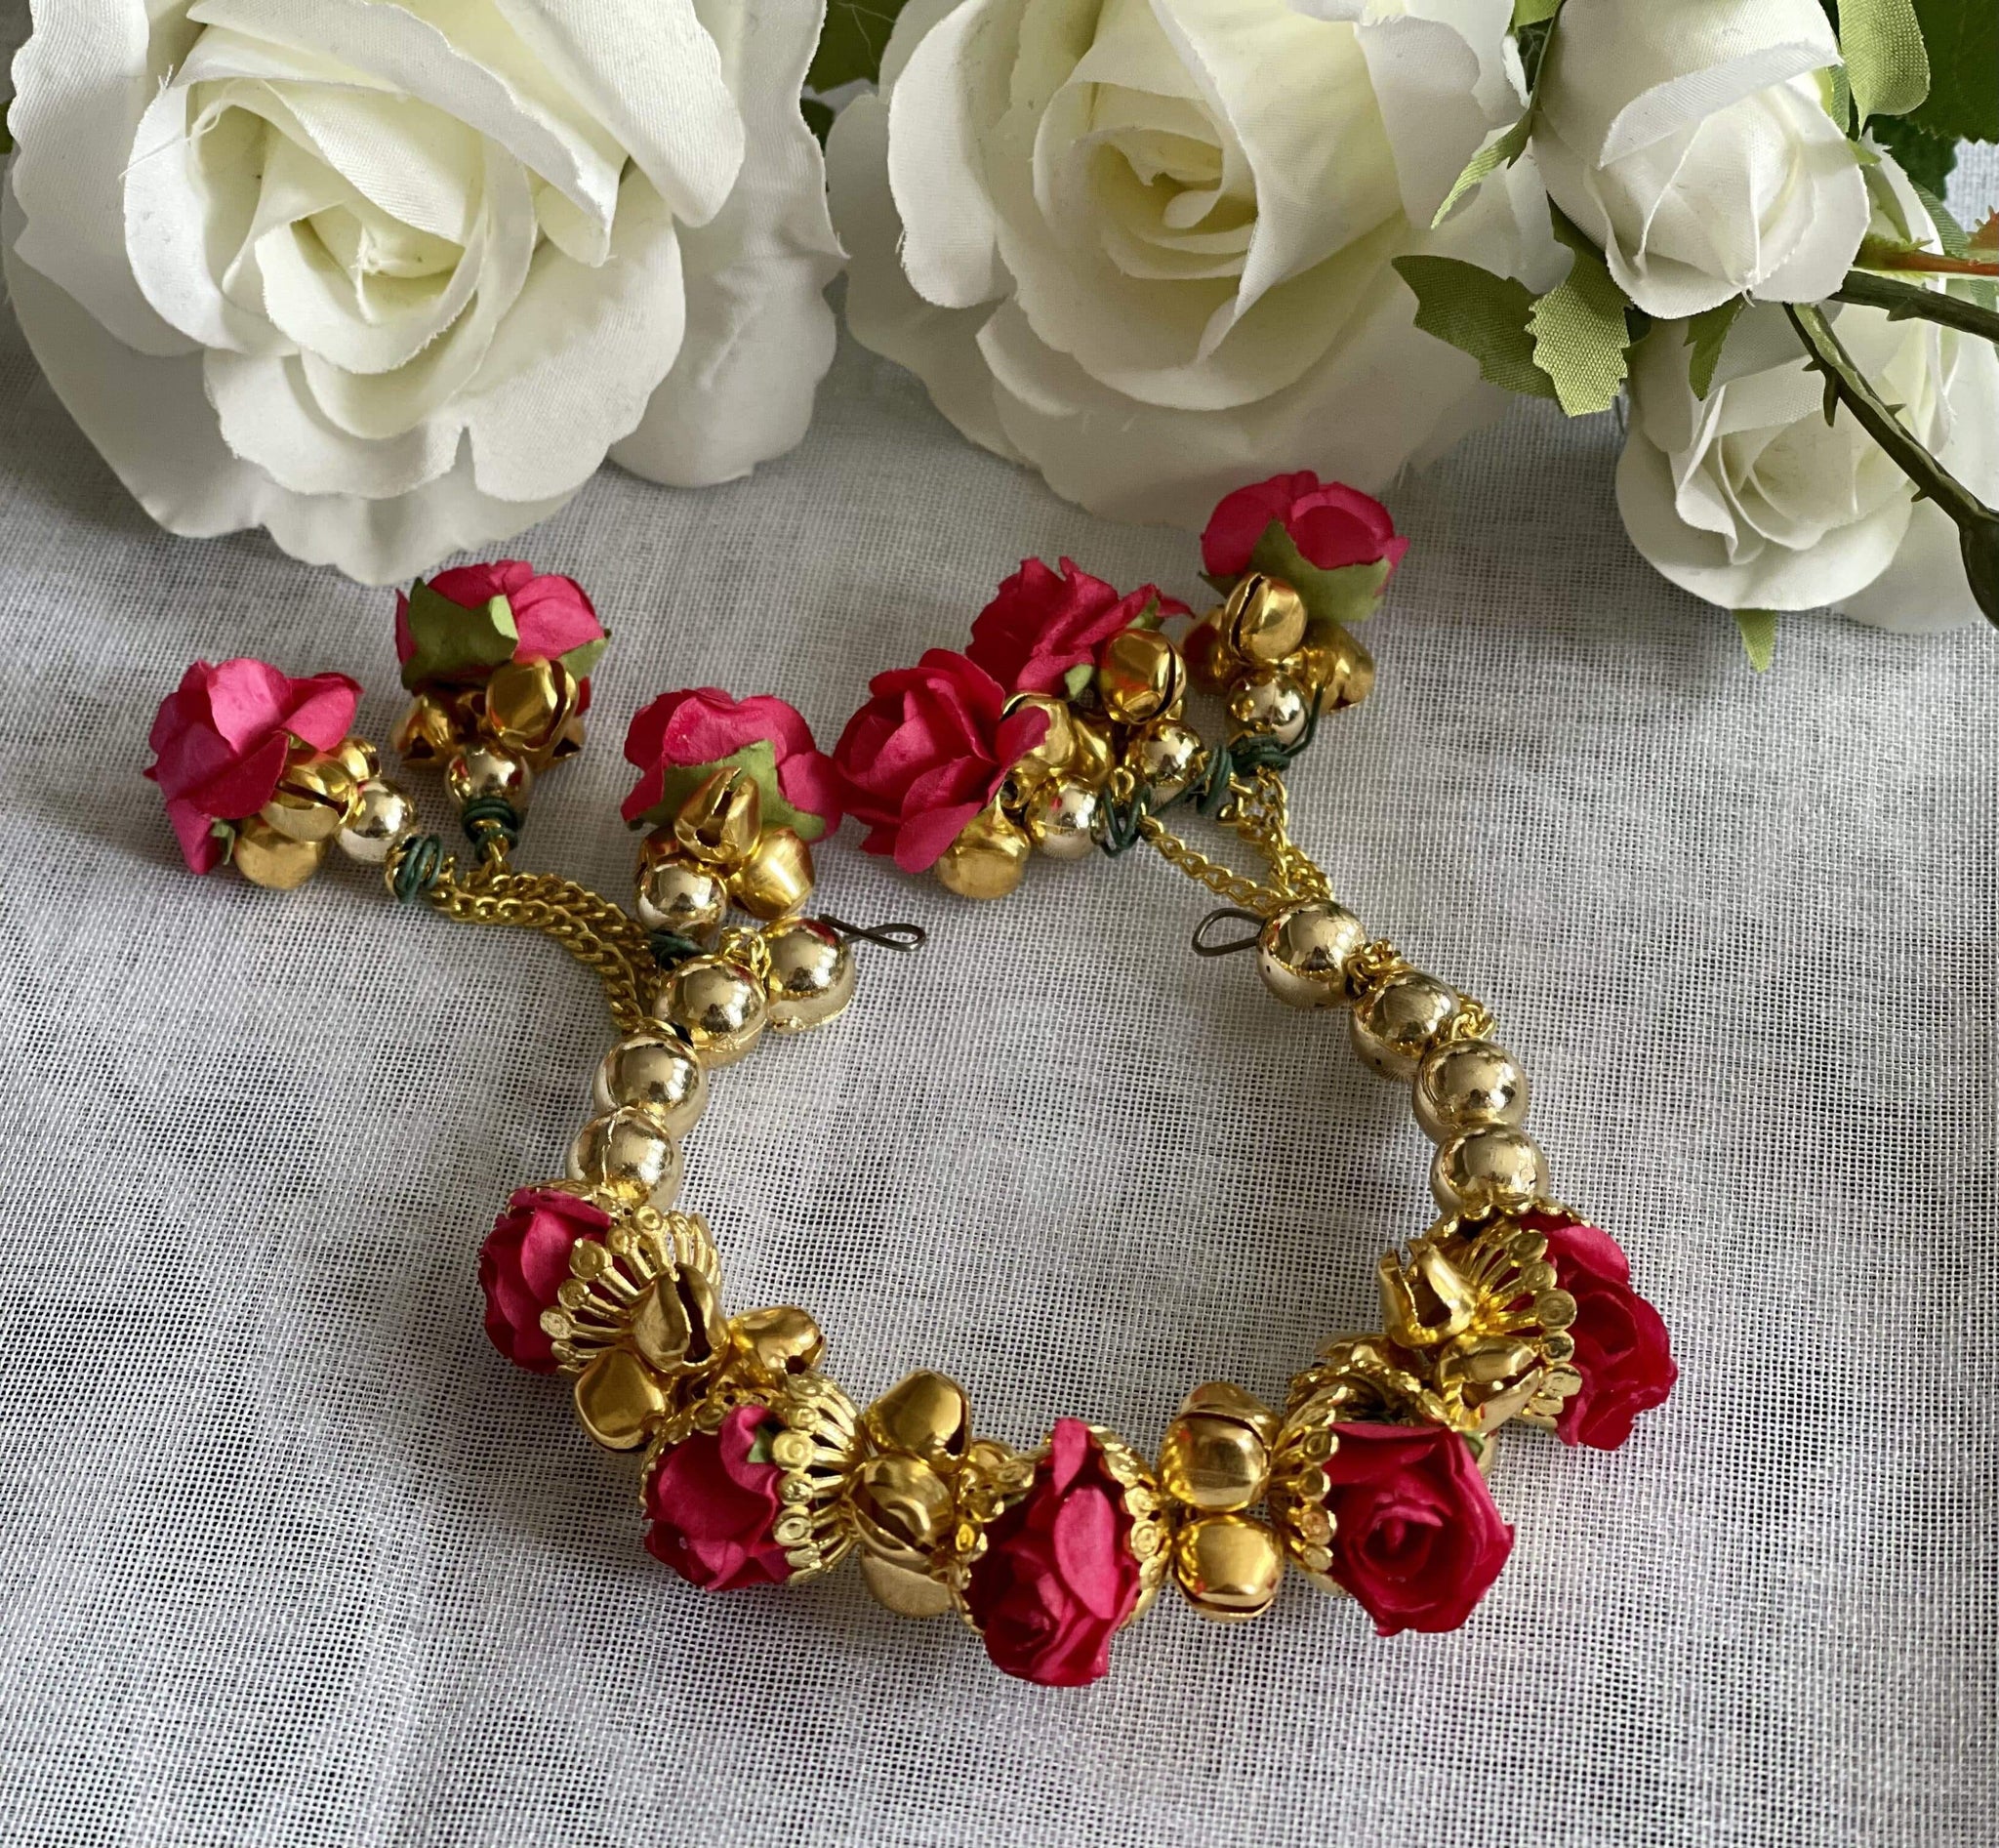 A Dozen Roses Bracelet  Abizan Jewelry